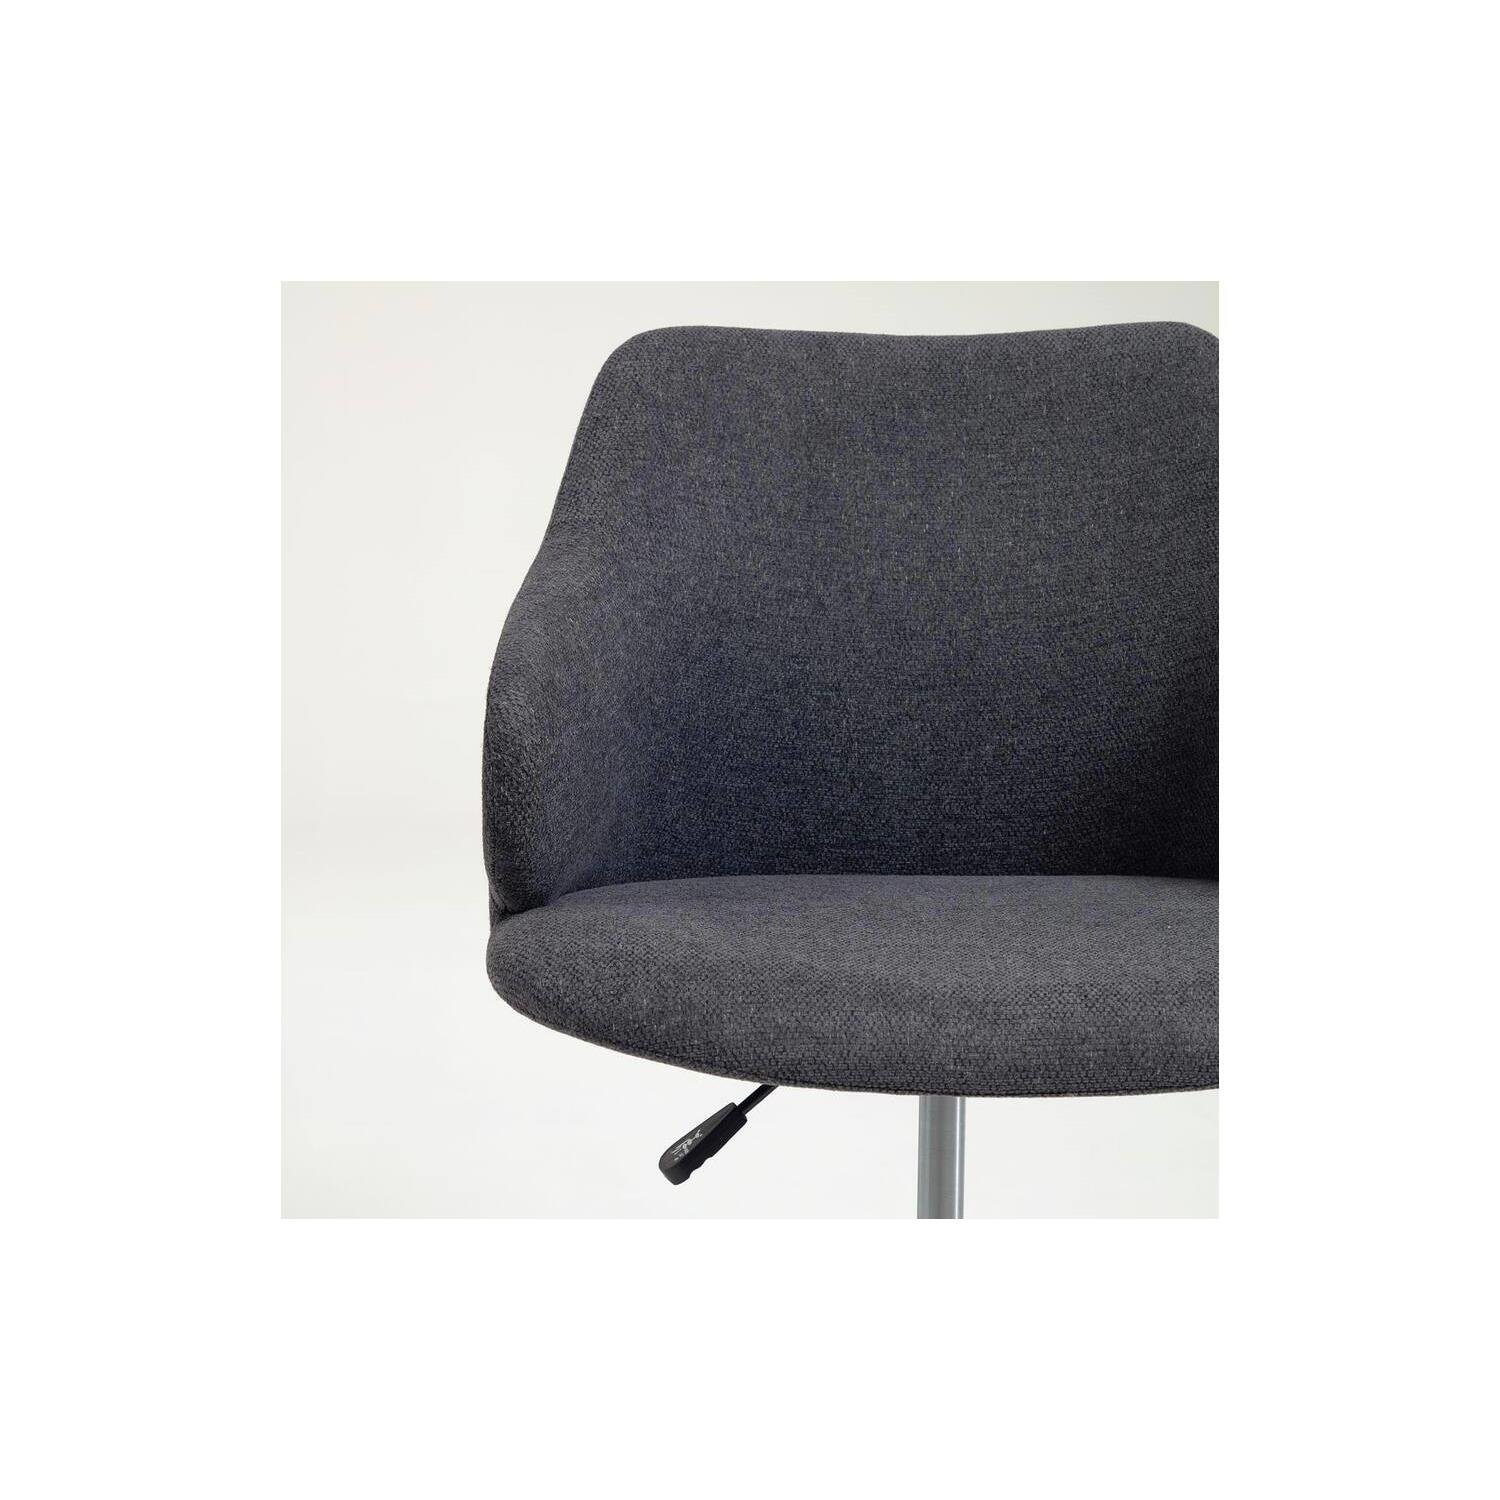 Einara light grey office chair